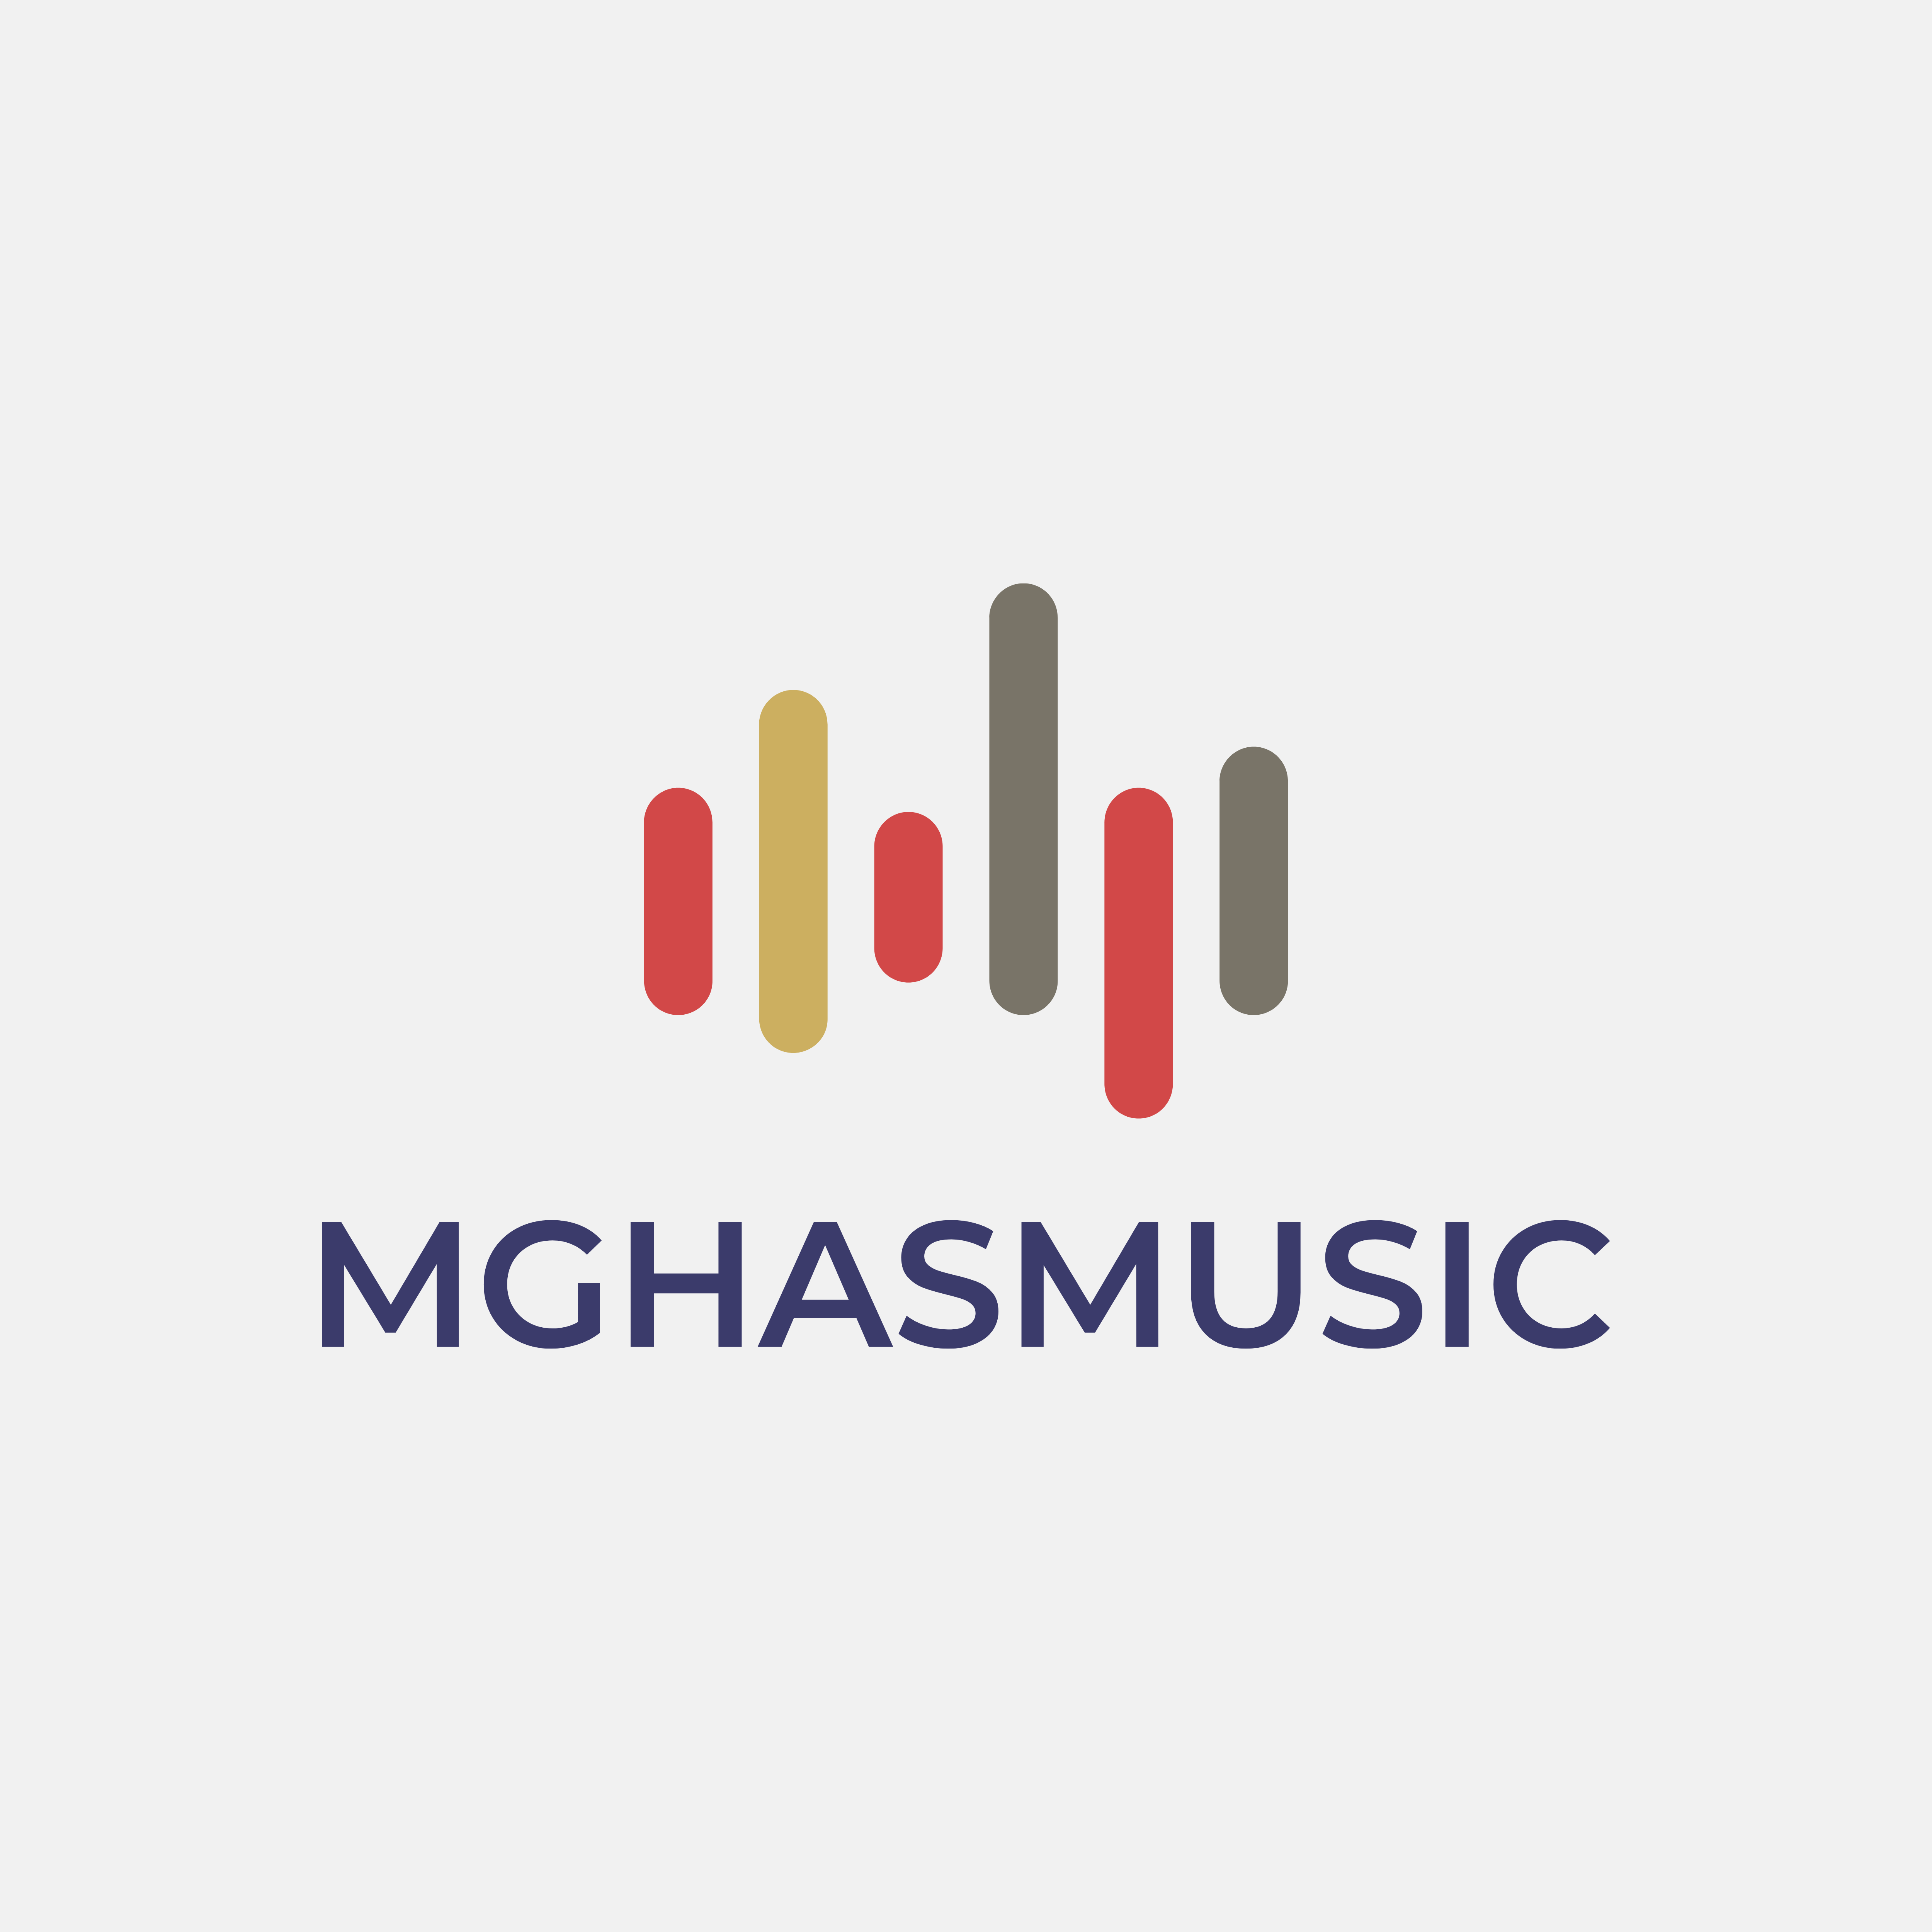 MGHASMUSIC Logo